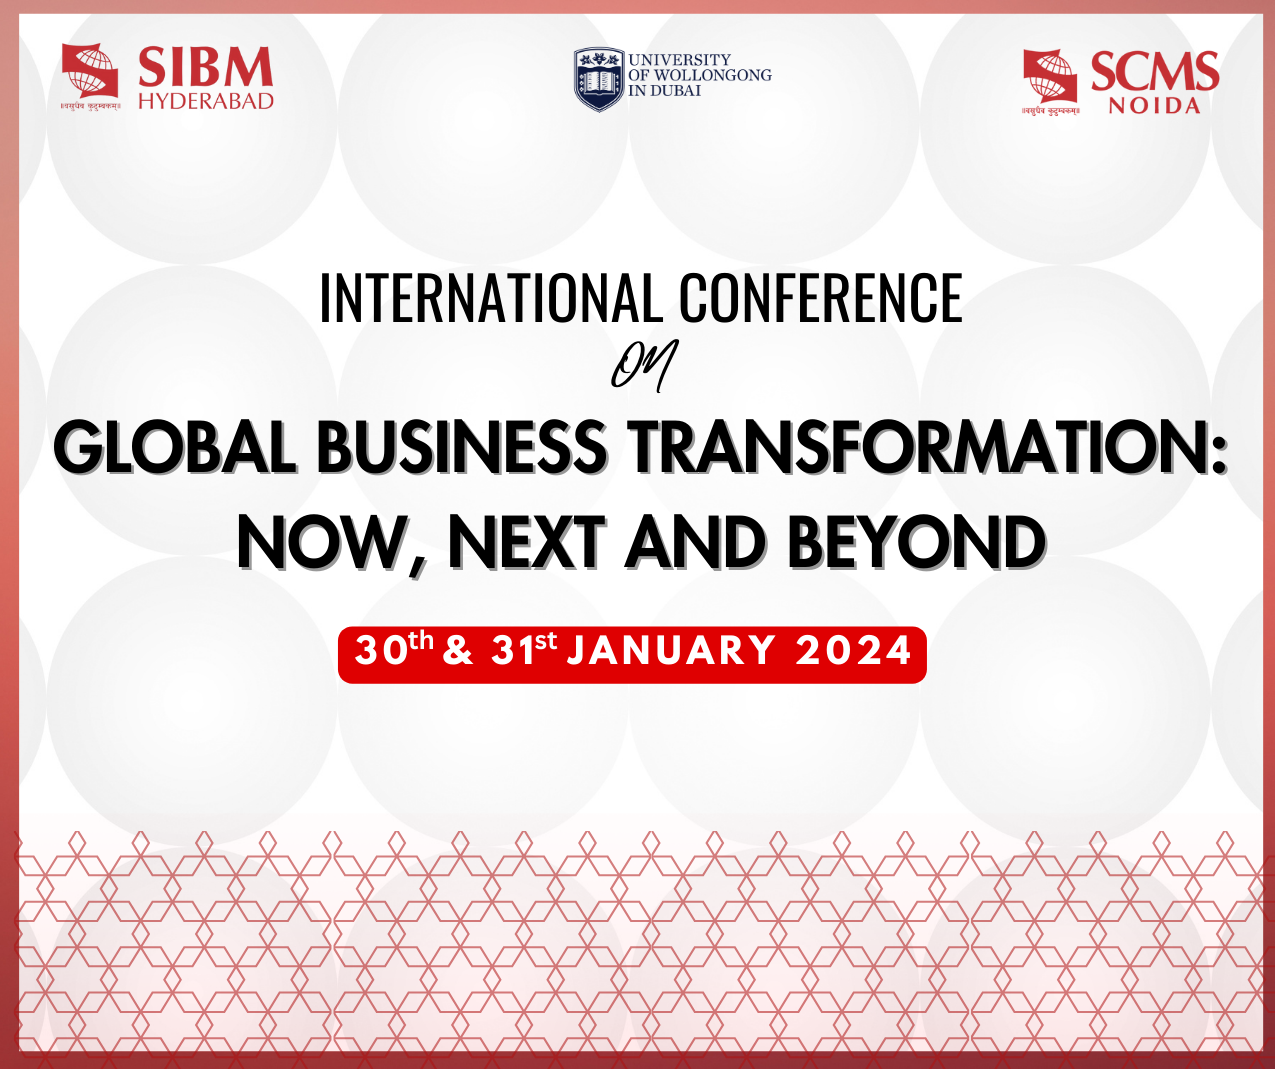 SCMS Noida international conference on global business transformation